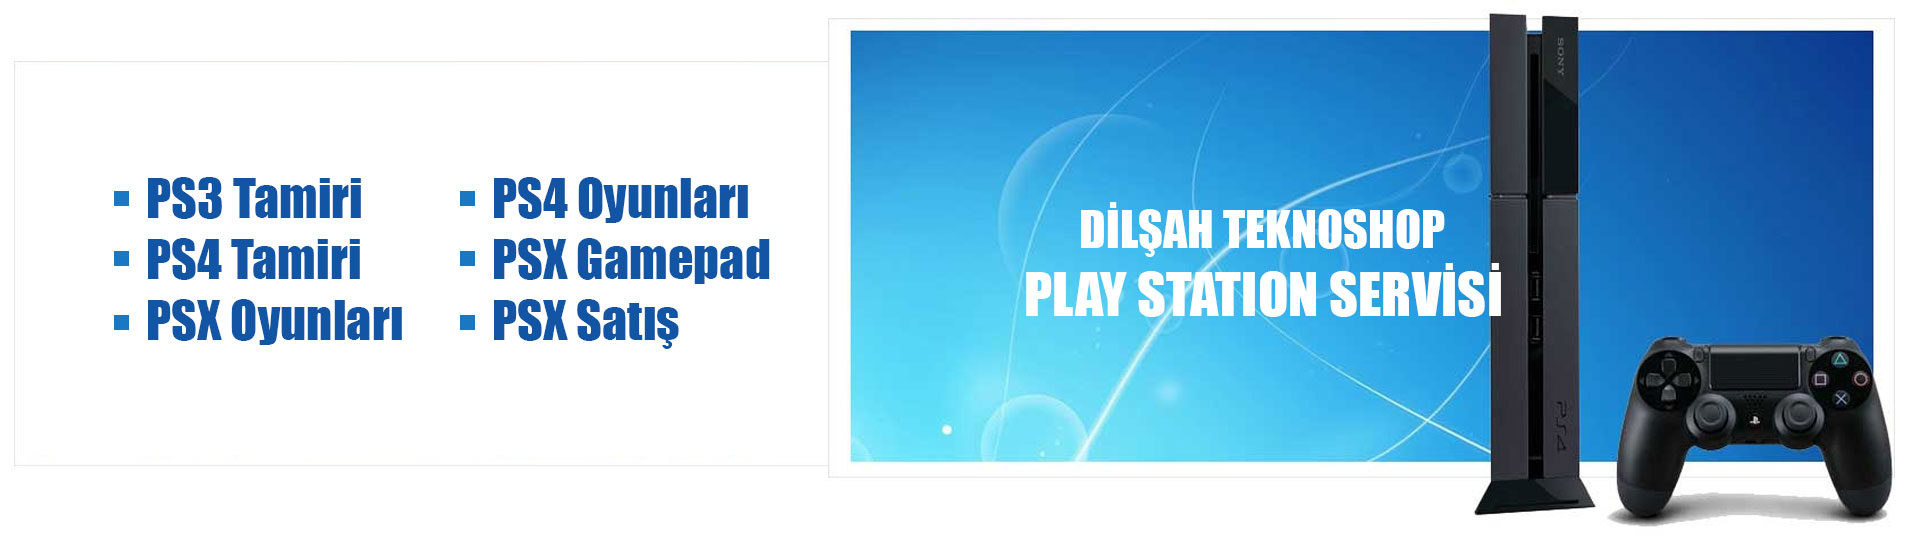 PlayStation Servisi Dilşah Teknoshop